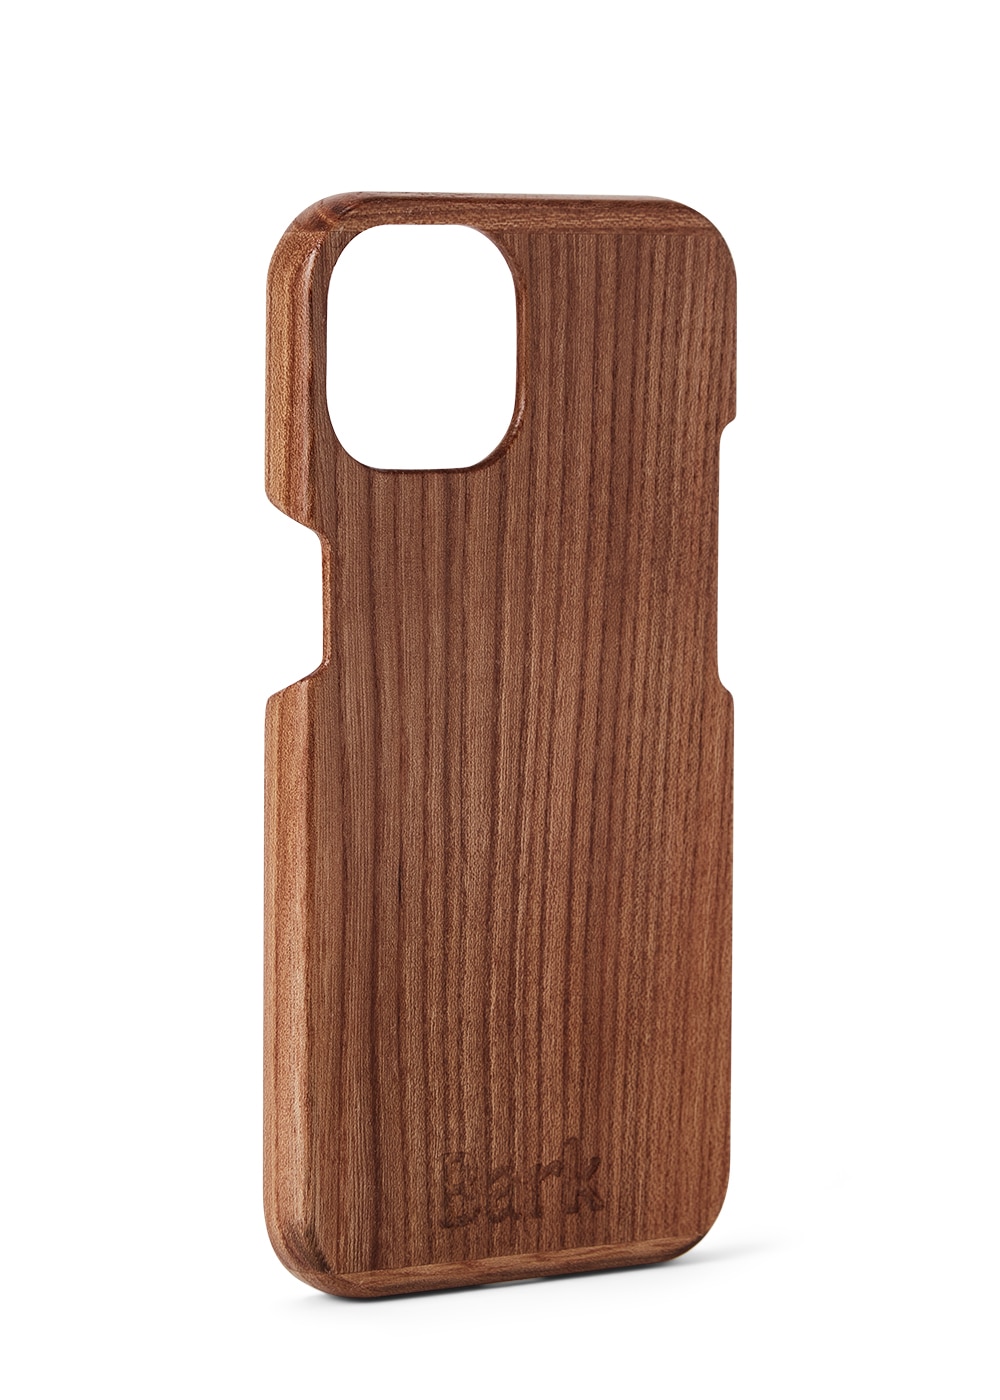 iPhone 13 case made of Swedish hardwood - Alm